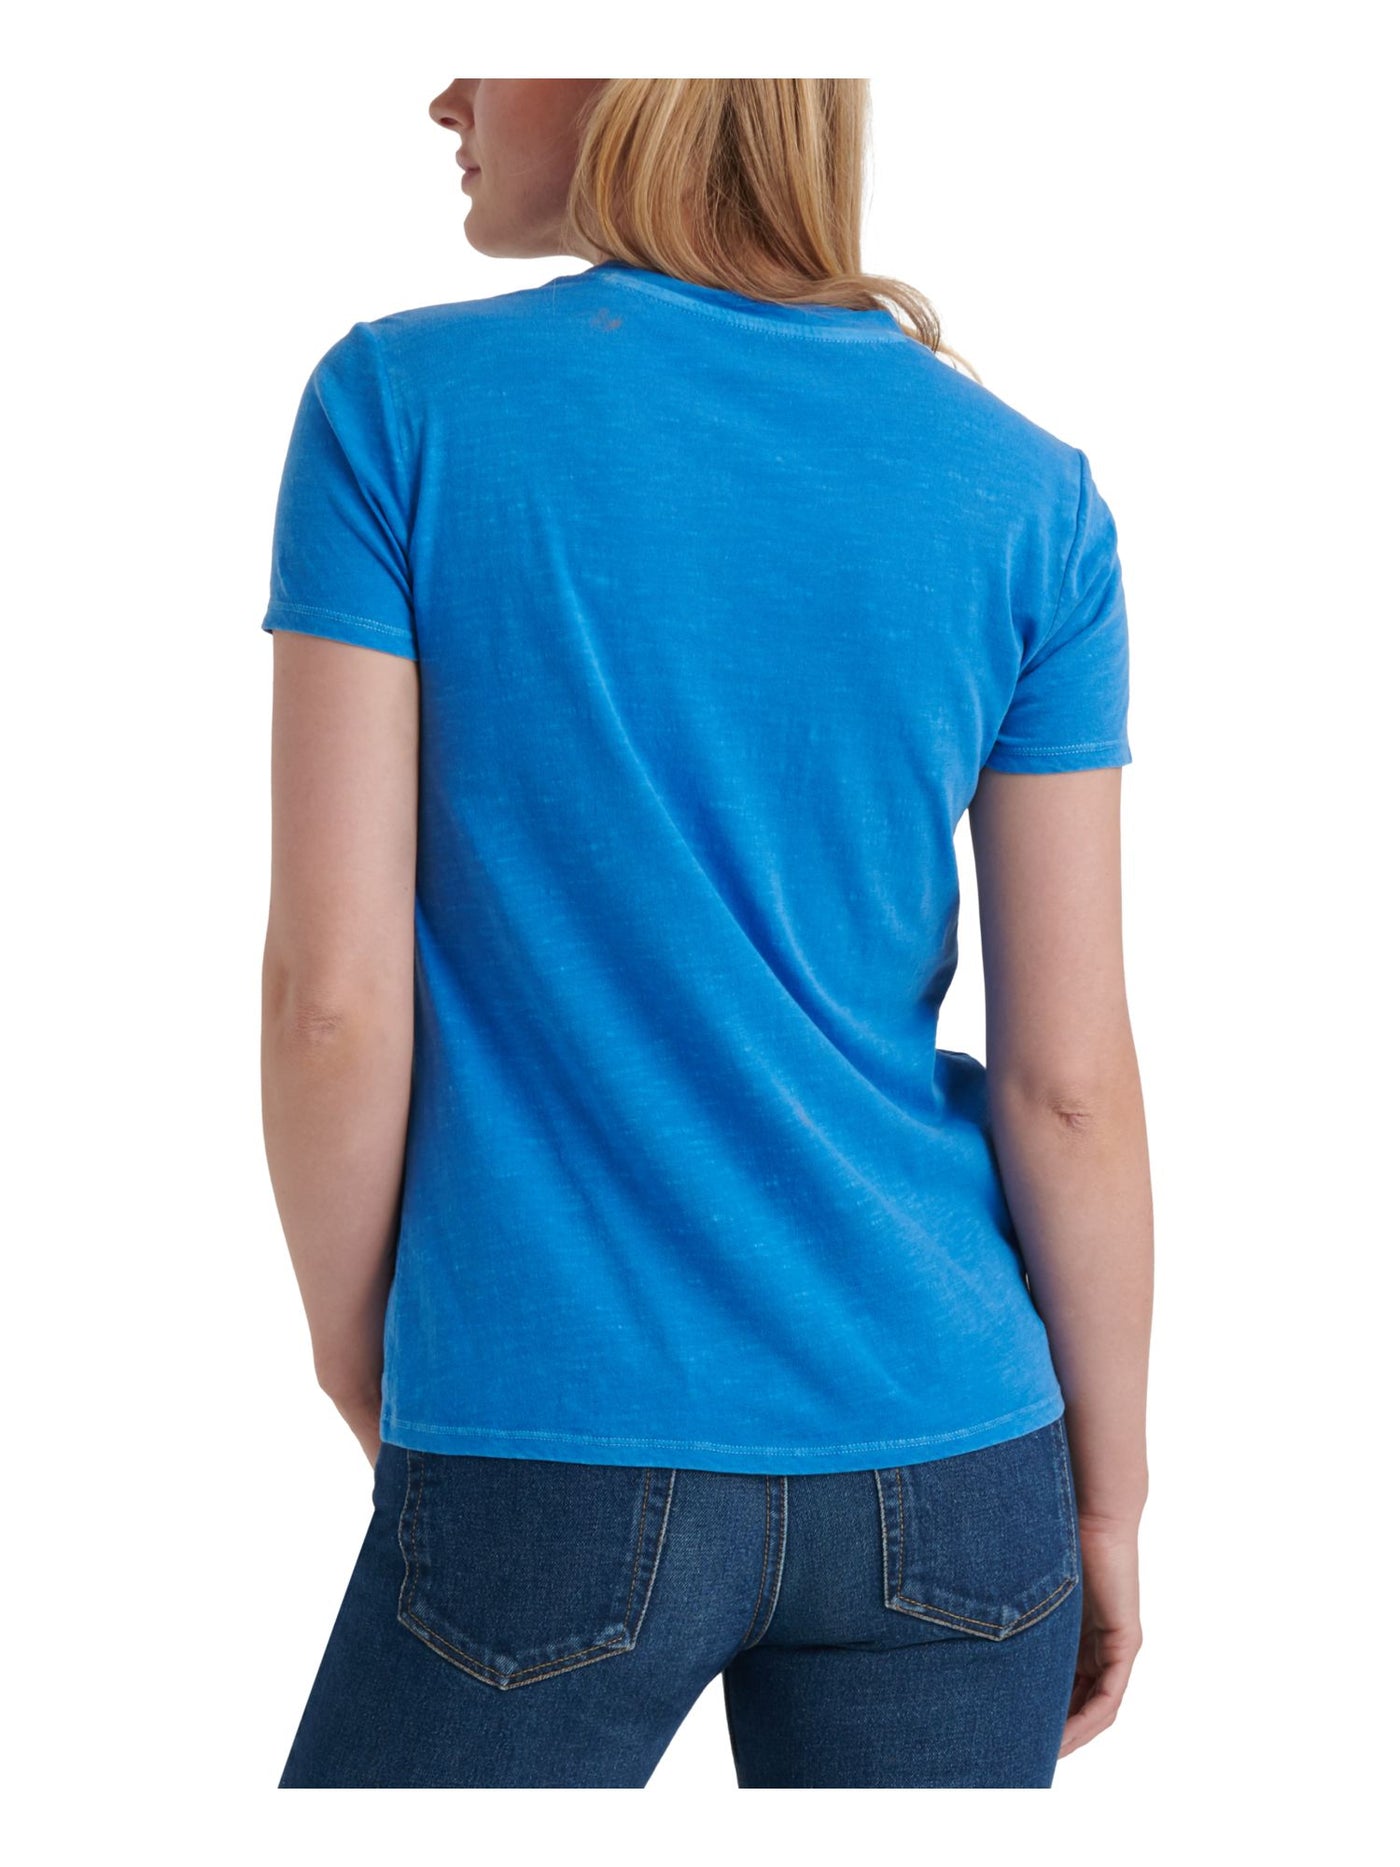 LUCKY BRAND Womens Blue Embroidered Short Sleeve Jewel Neck T-Shirt XS\TP